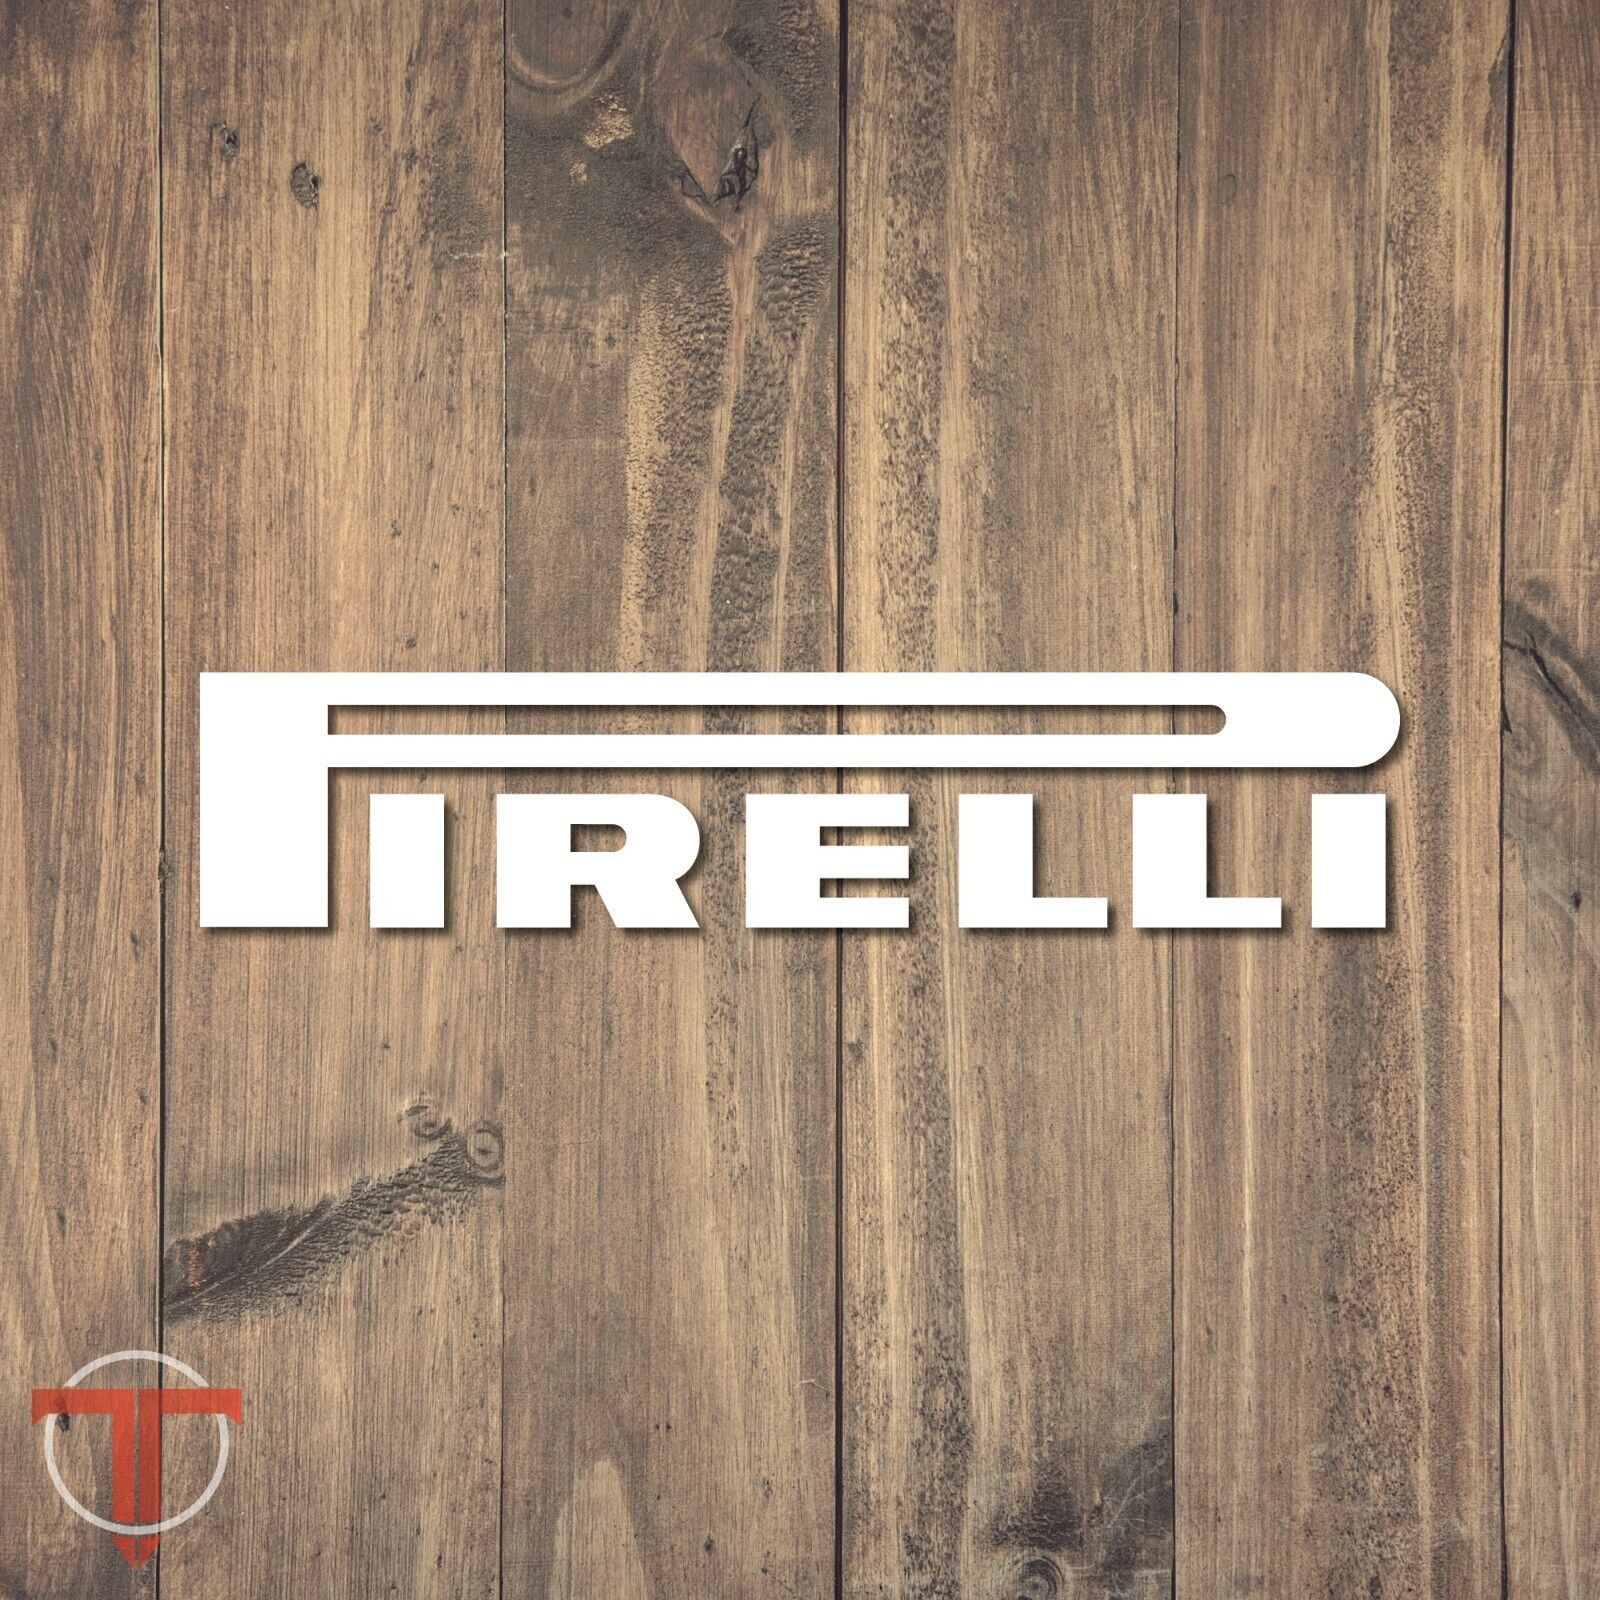 Pirelli Tires Automotive Motorcycle Vinyl Sticker Decal